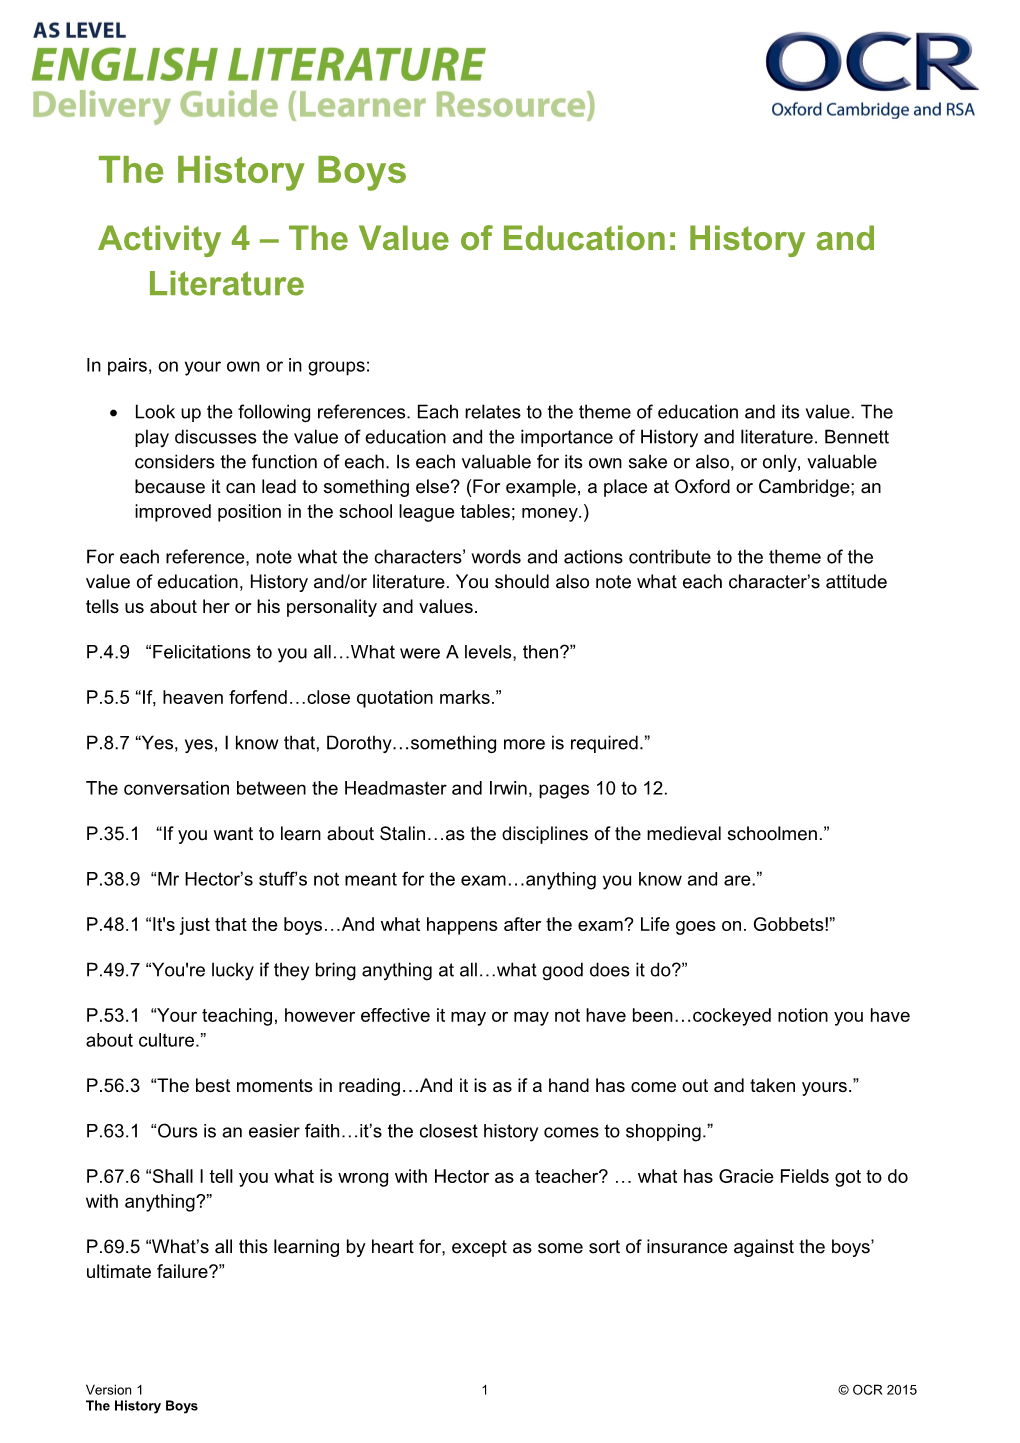 OCR AS Level English Literature - the History Boys - Activity 4